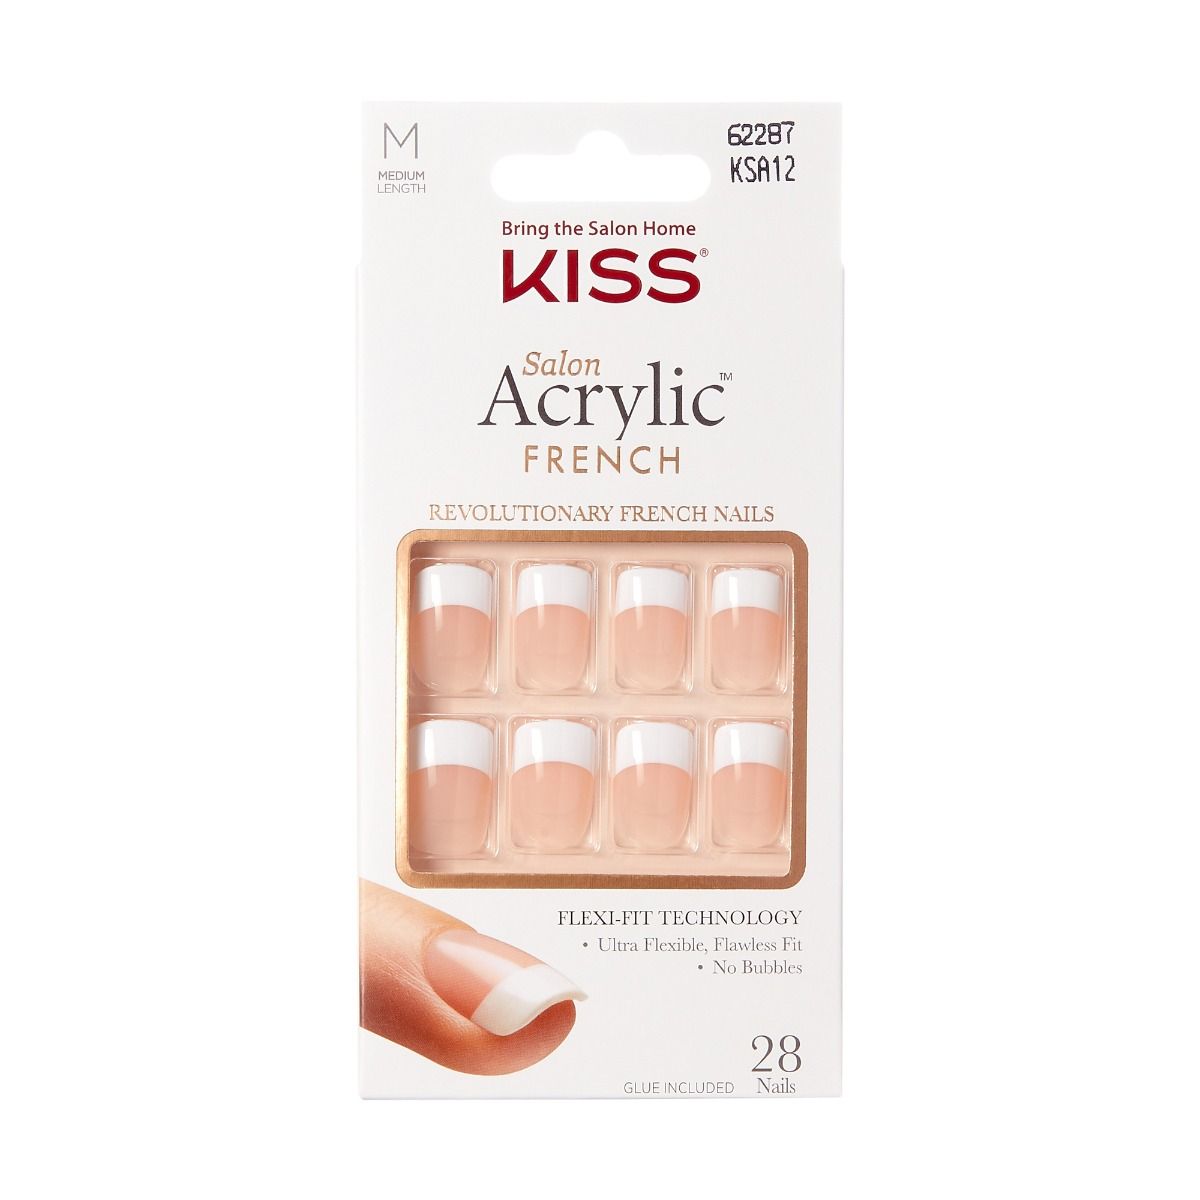 KISS Salon Acrylic French 28 Nails #KSA12